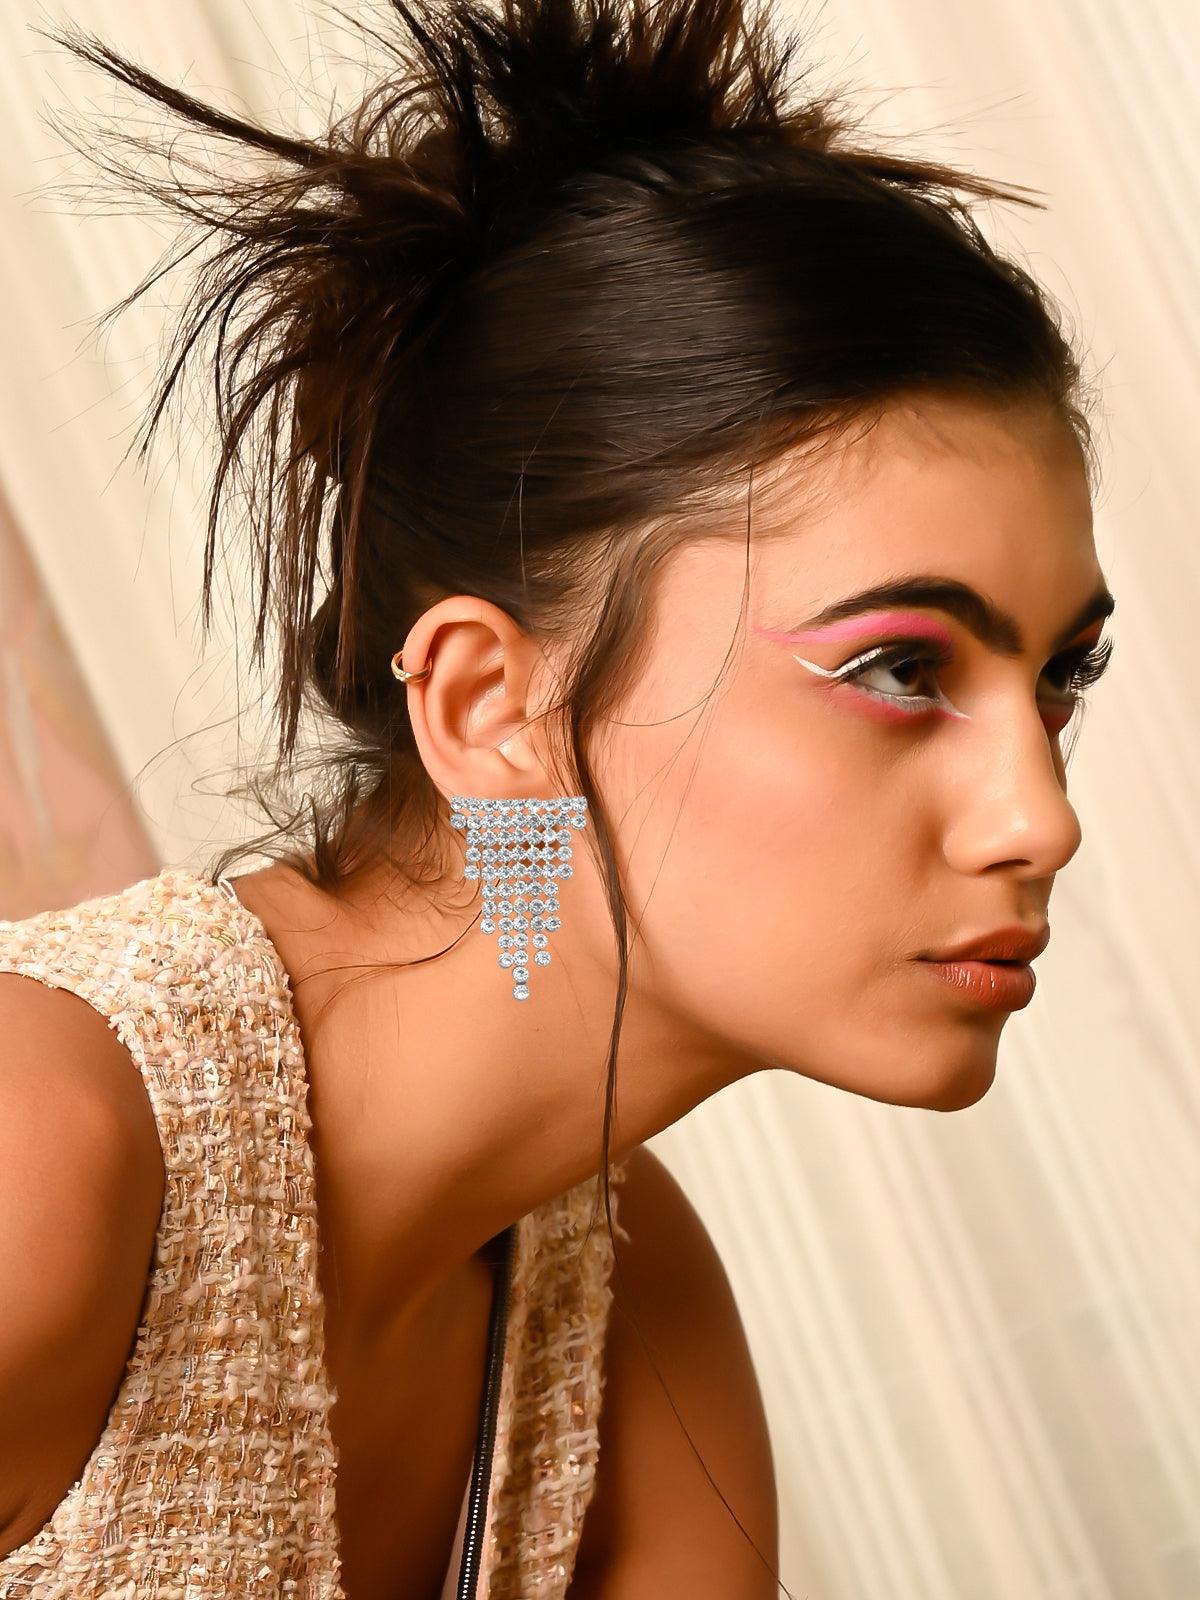 Women's Shinning Crystal Studded Statement Earrings- Silver - Odette